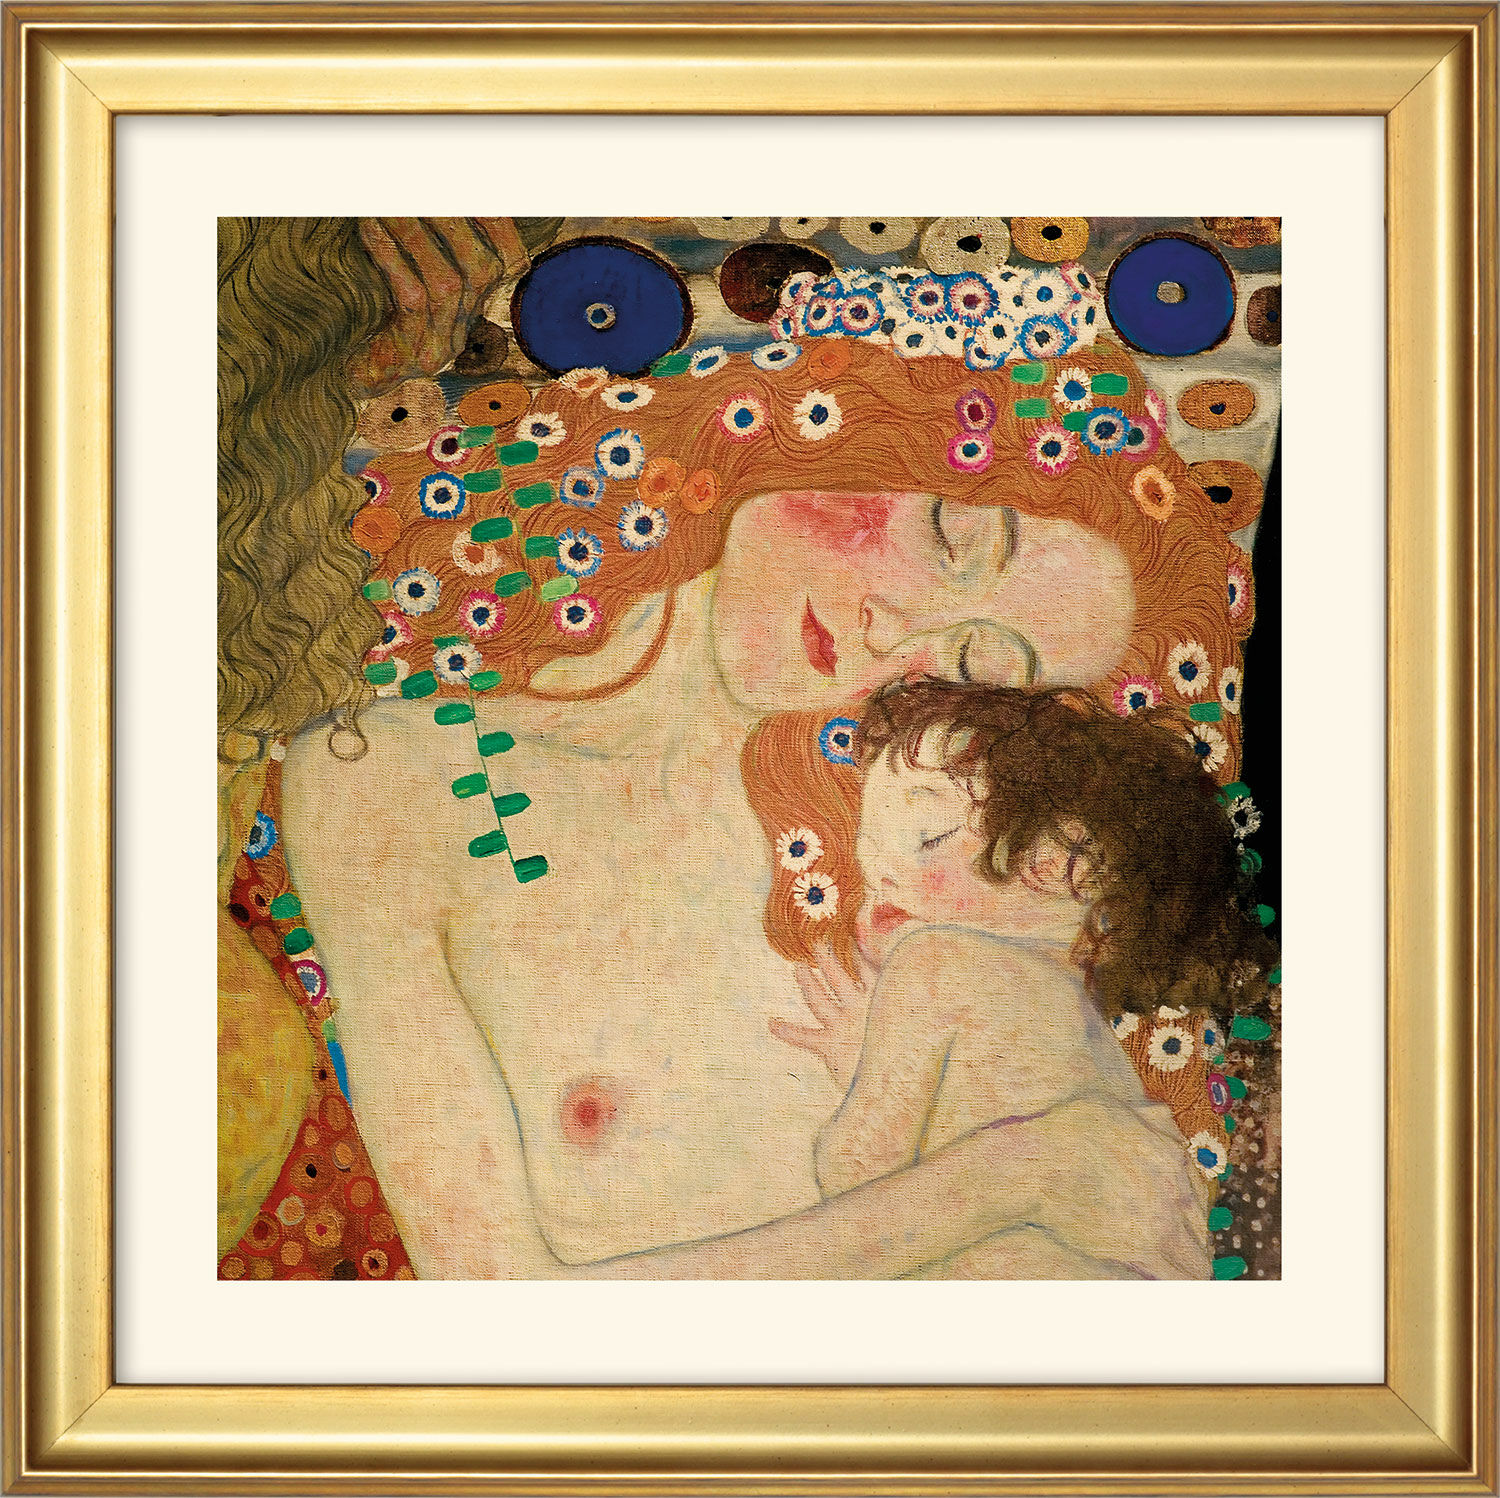 Picture "Mother and Child" (1905), framed by Gustav Klimt